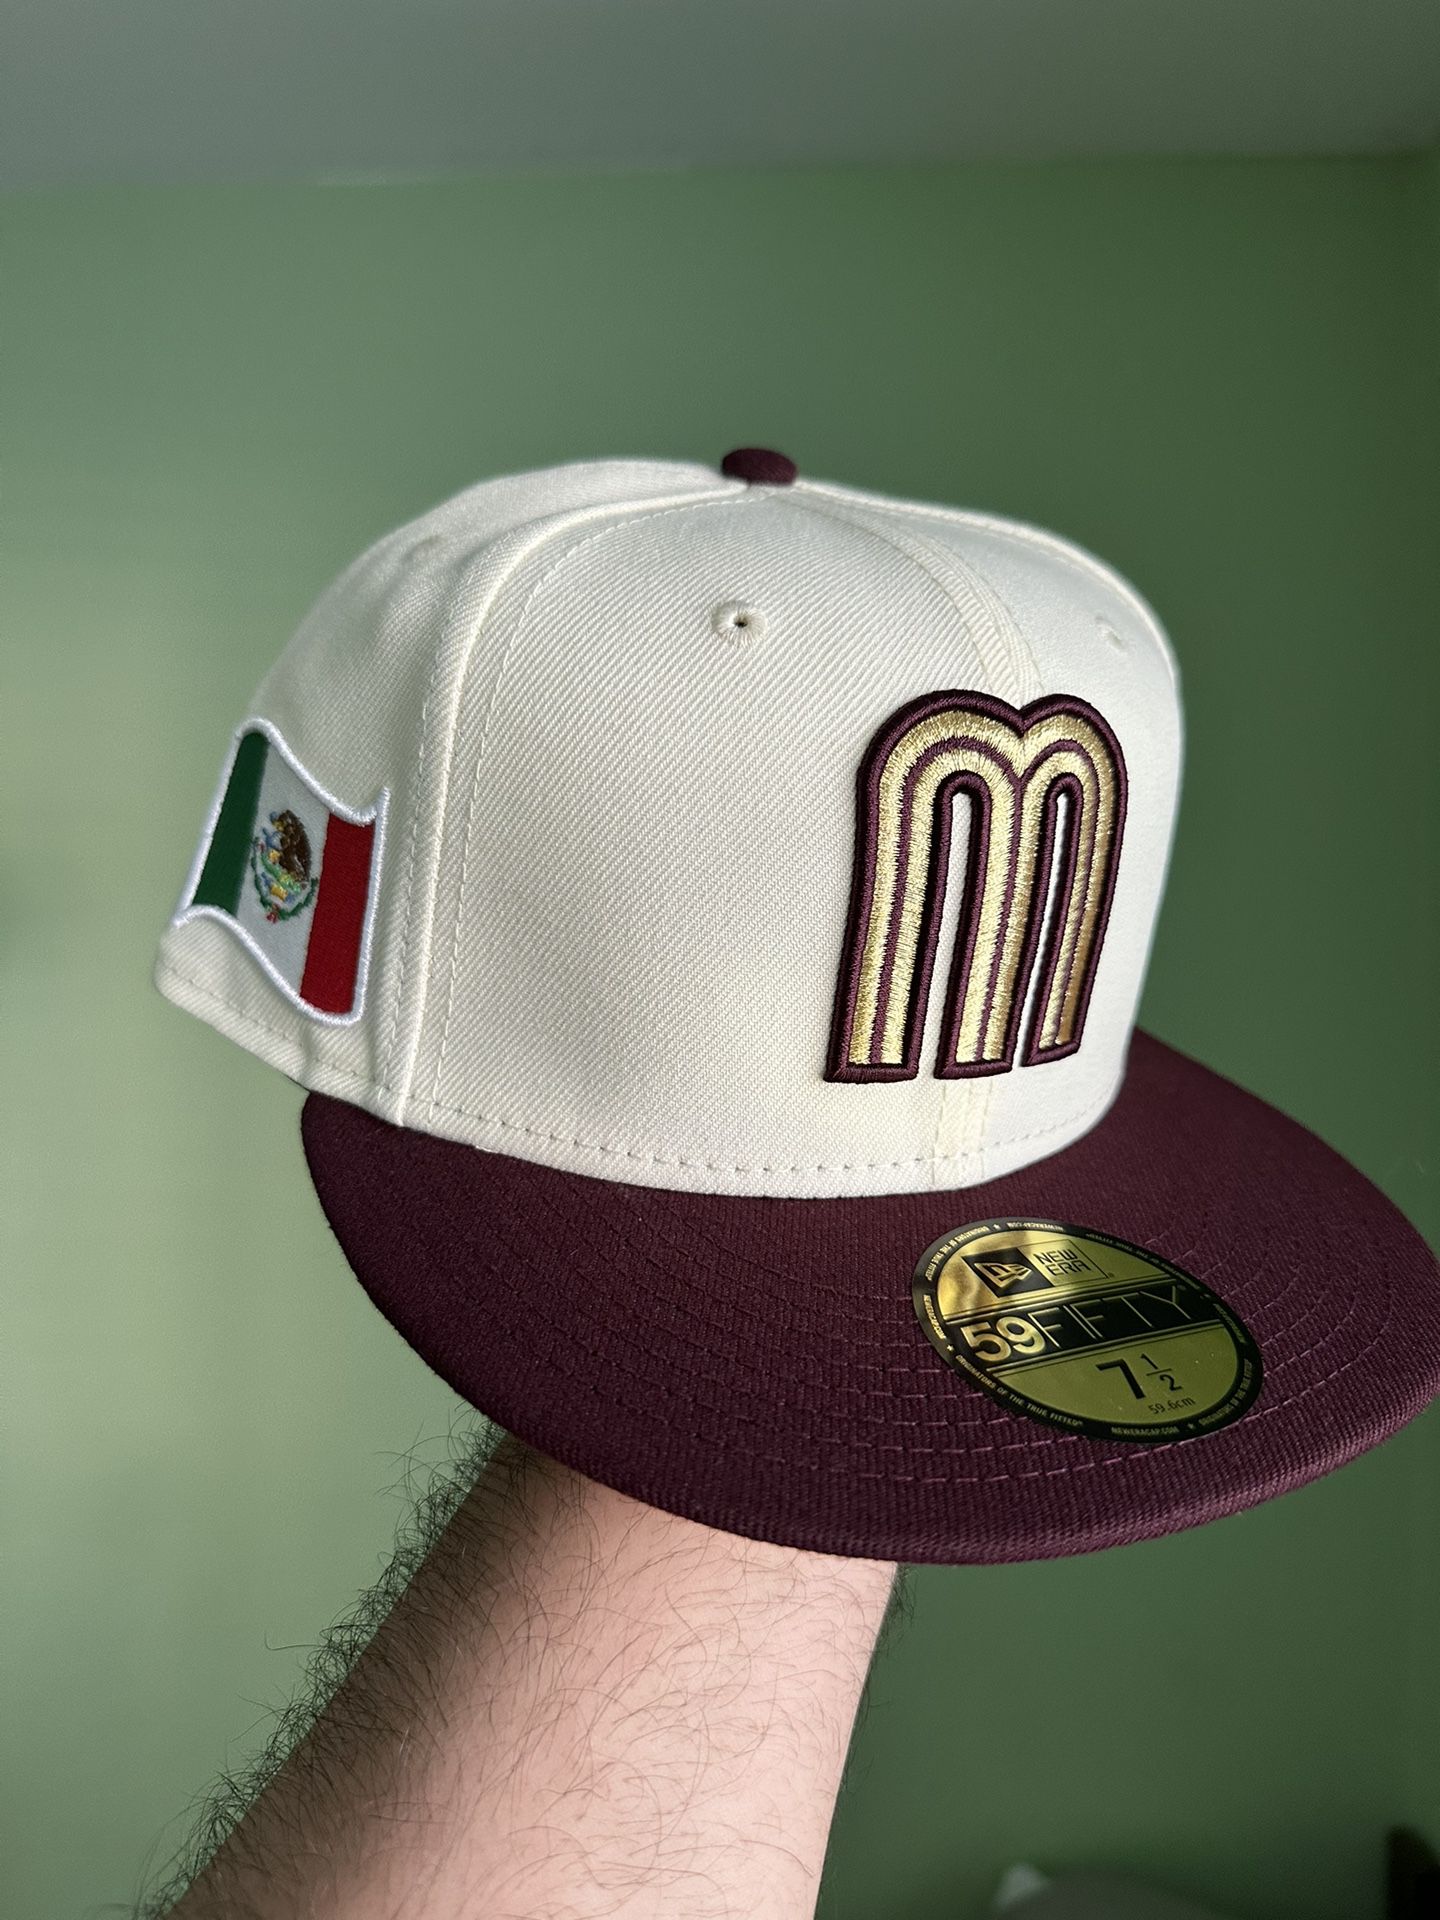 WBC 2023 Mexico New Era hat World Baseball Classic Limited Edition khaki 7  1/4 for Sale in Pontiac, MI - OfferUp